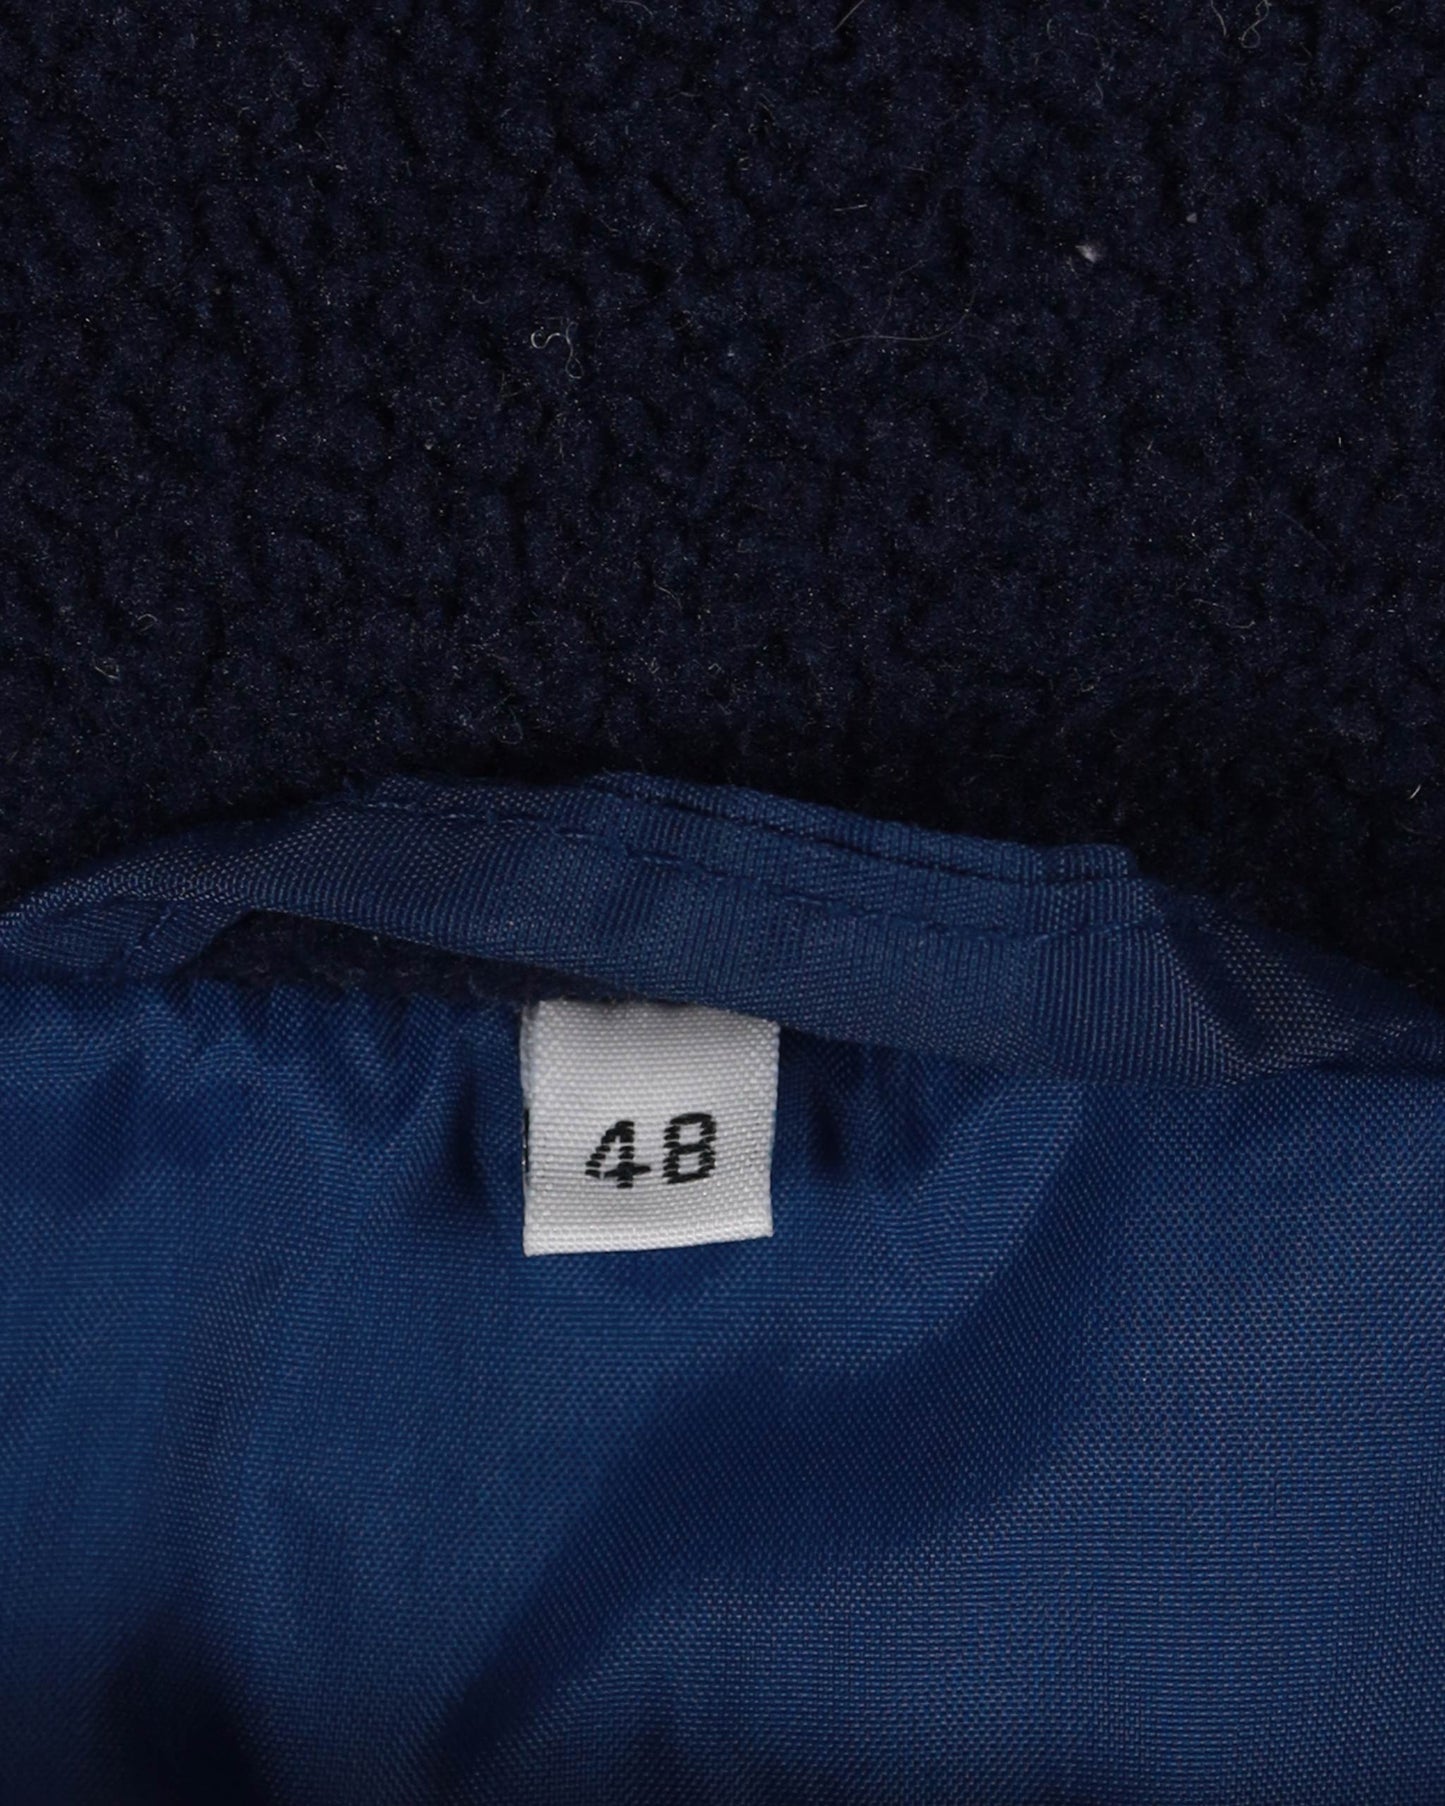 Brugi Ski wear Jacket Blue 48